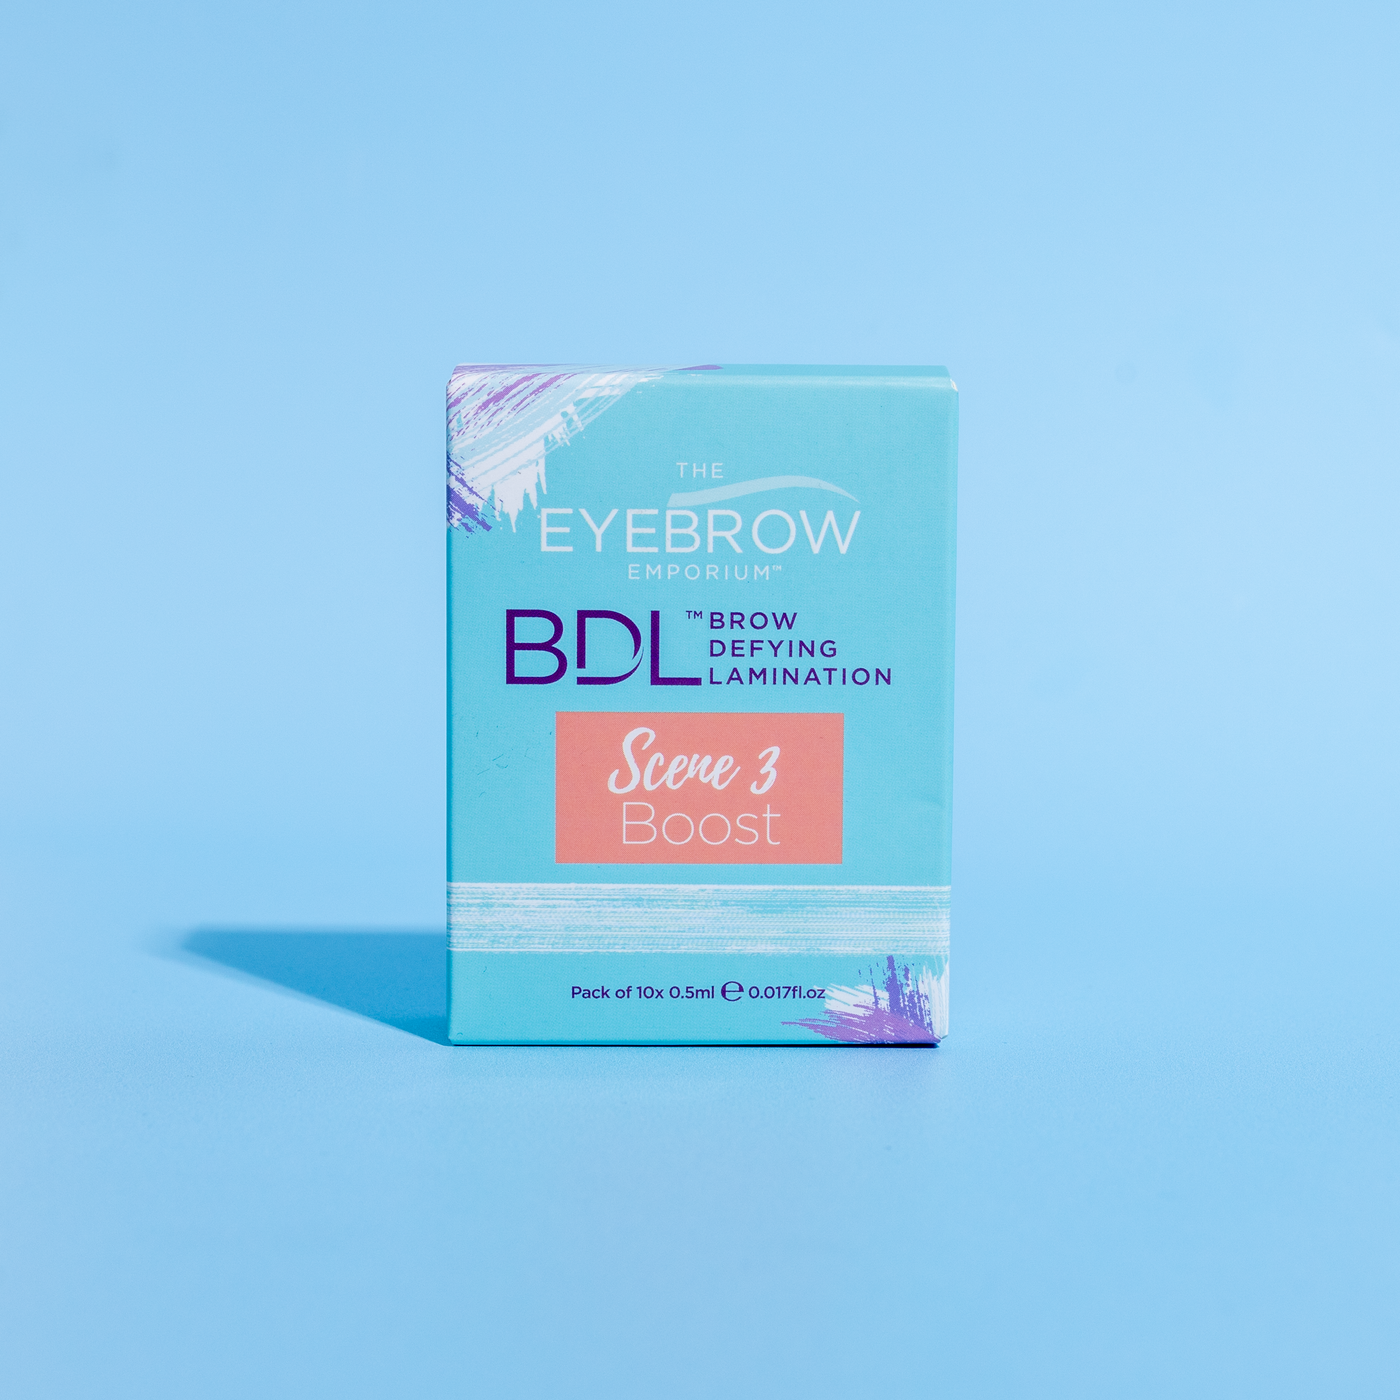 BDL Brow Lamination - Boost Solution (10 x 0.5ml)